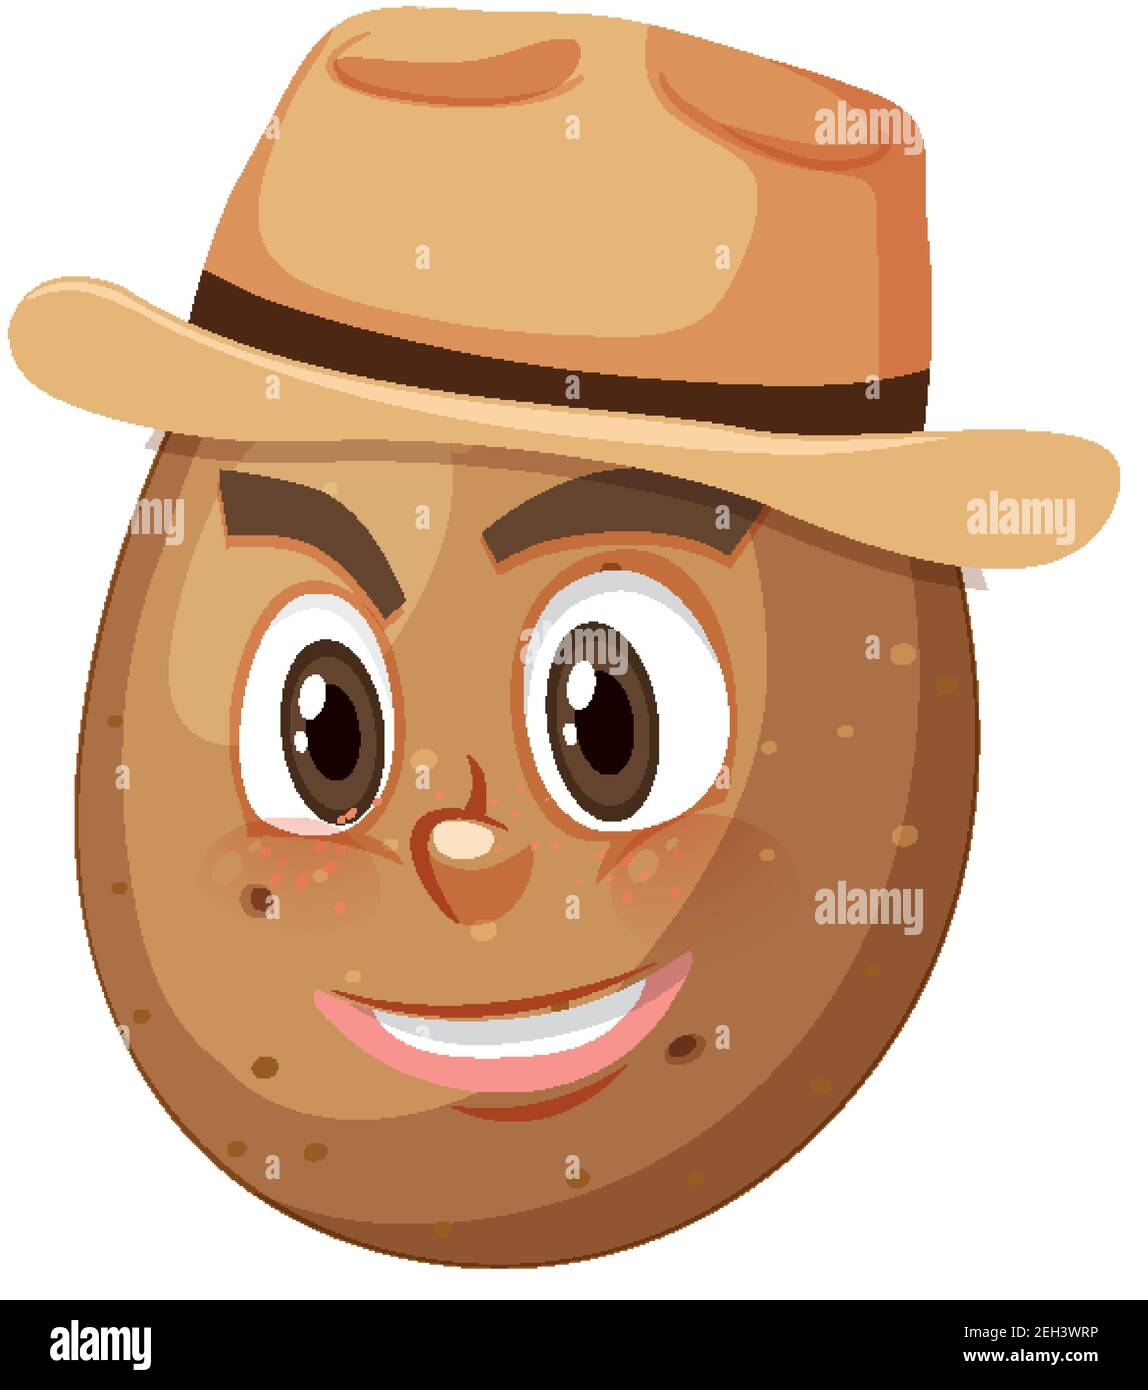 Potato cartoon character with facial expression illustration Stock Vector